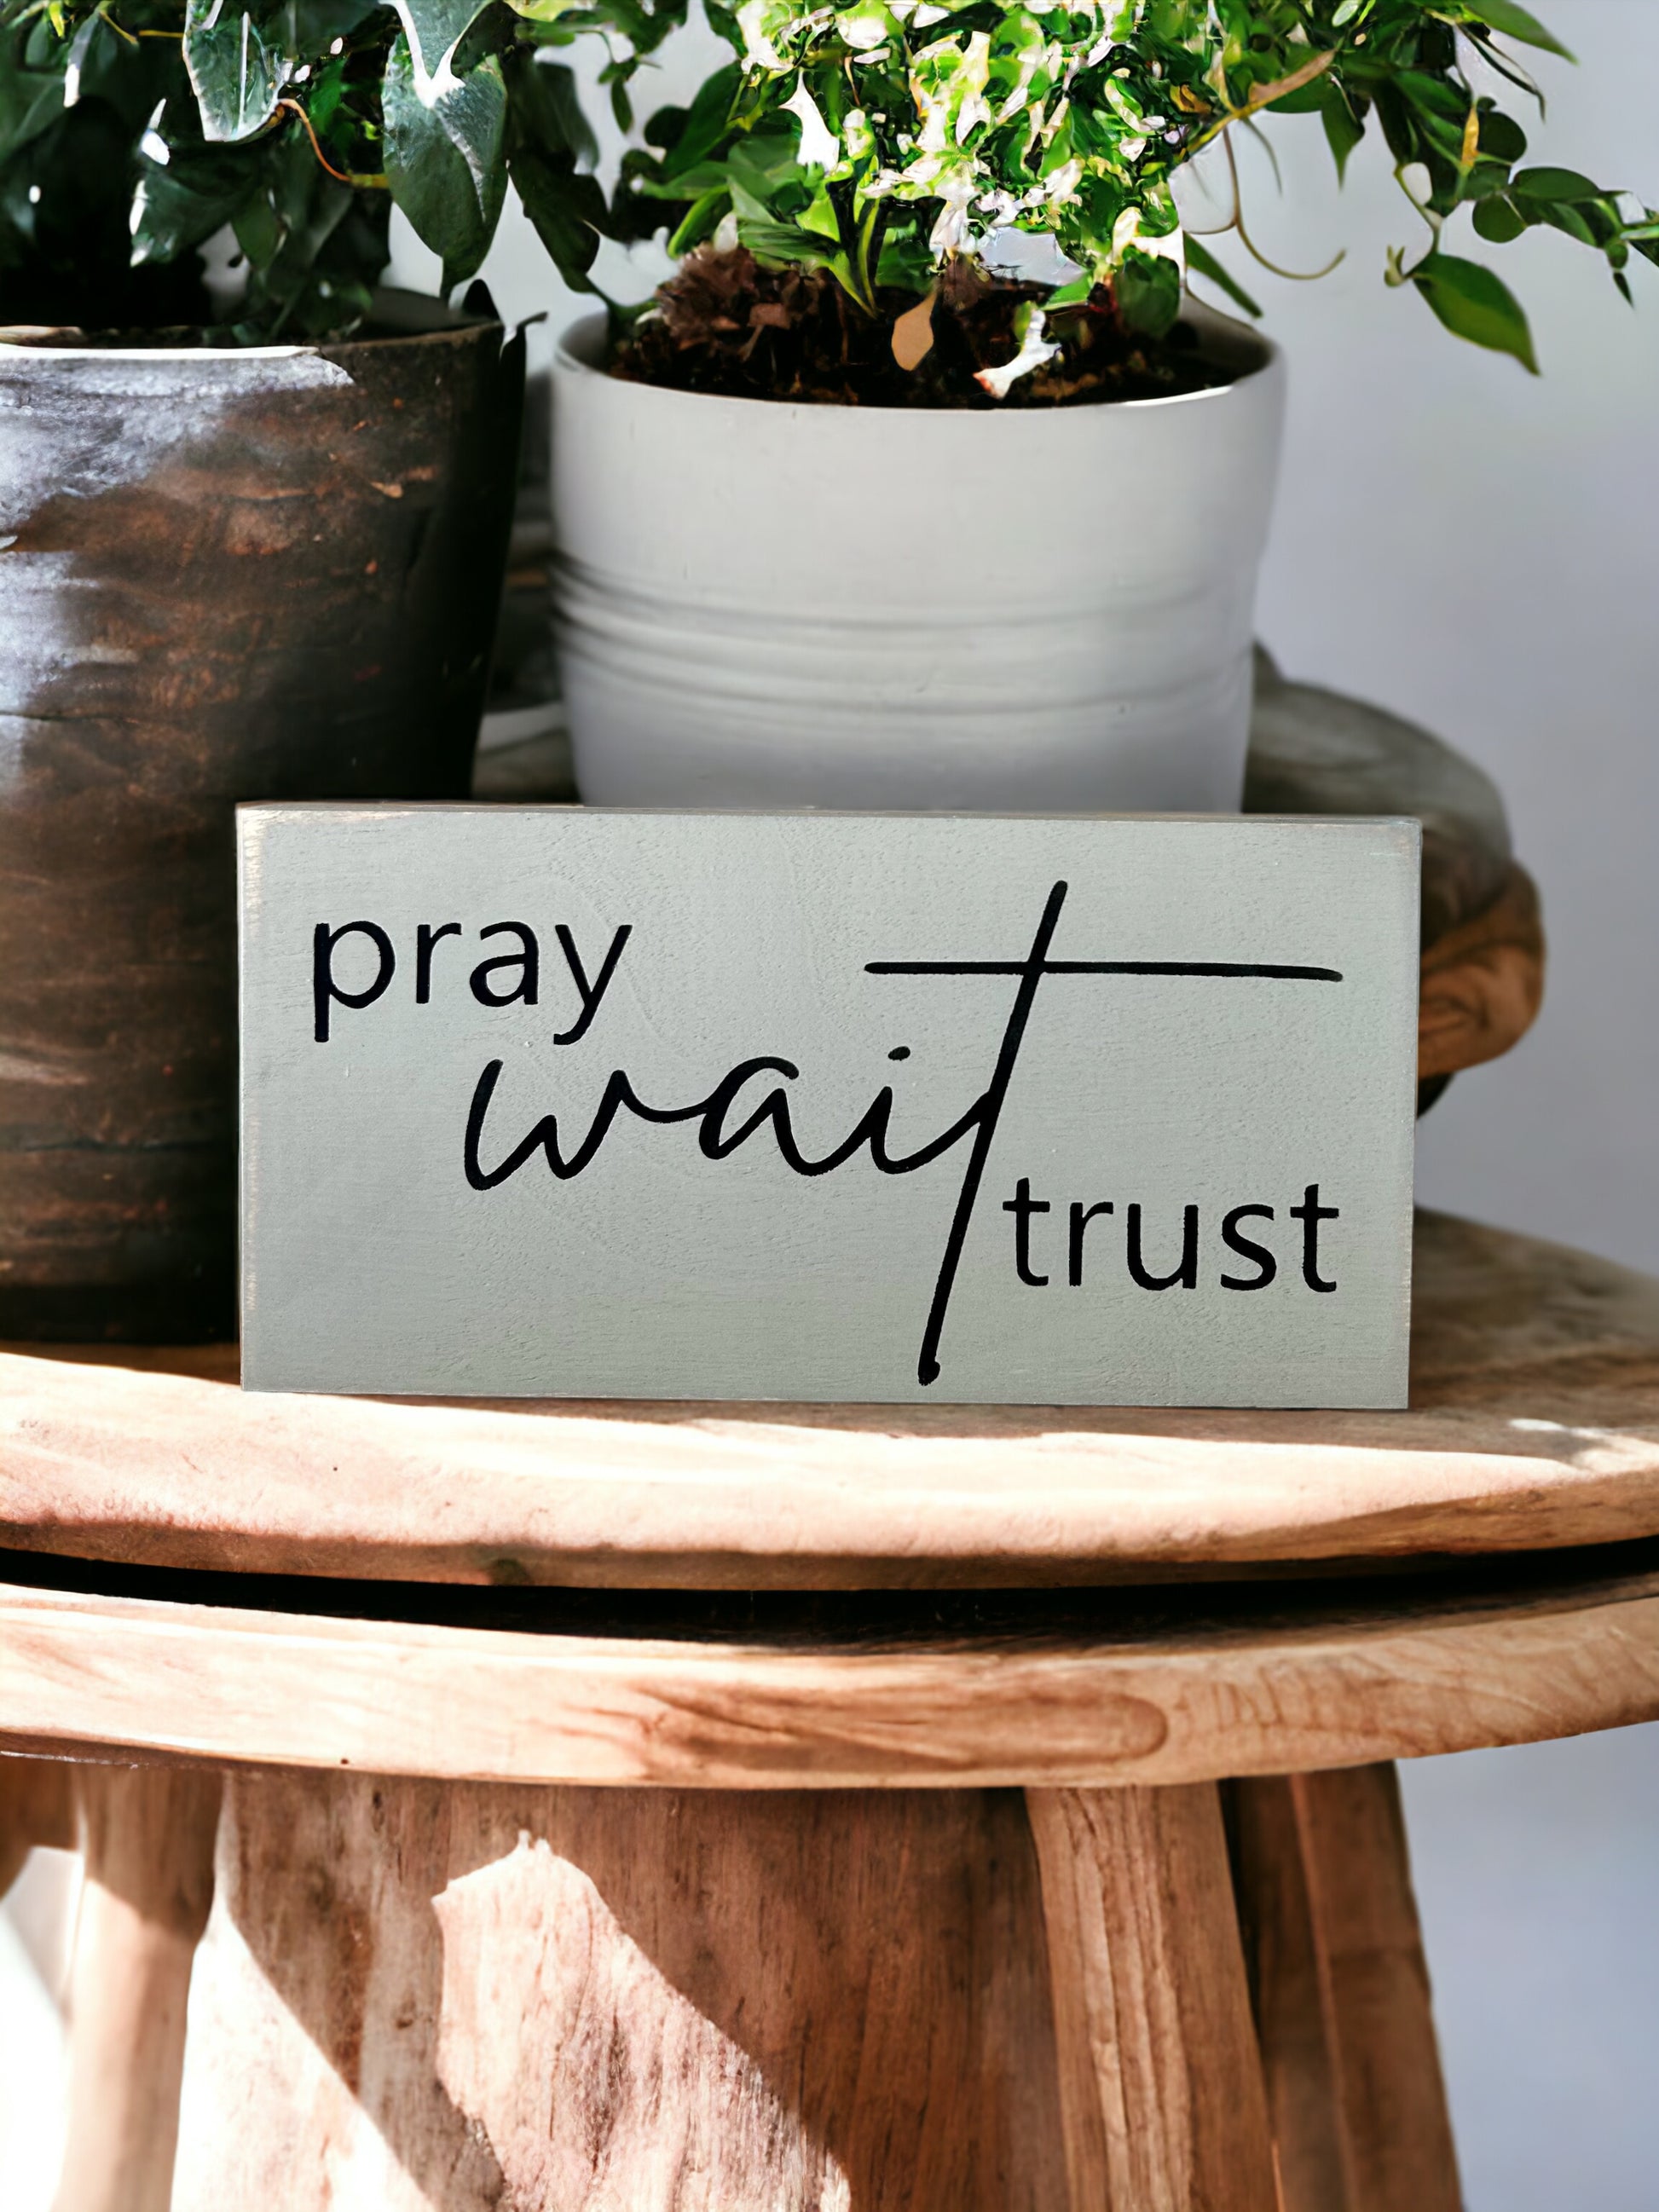 "Pray wait trust" wood sign